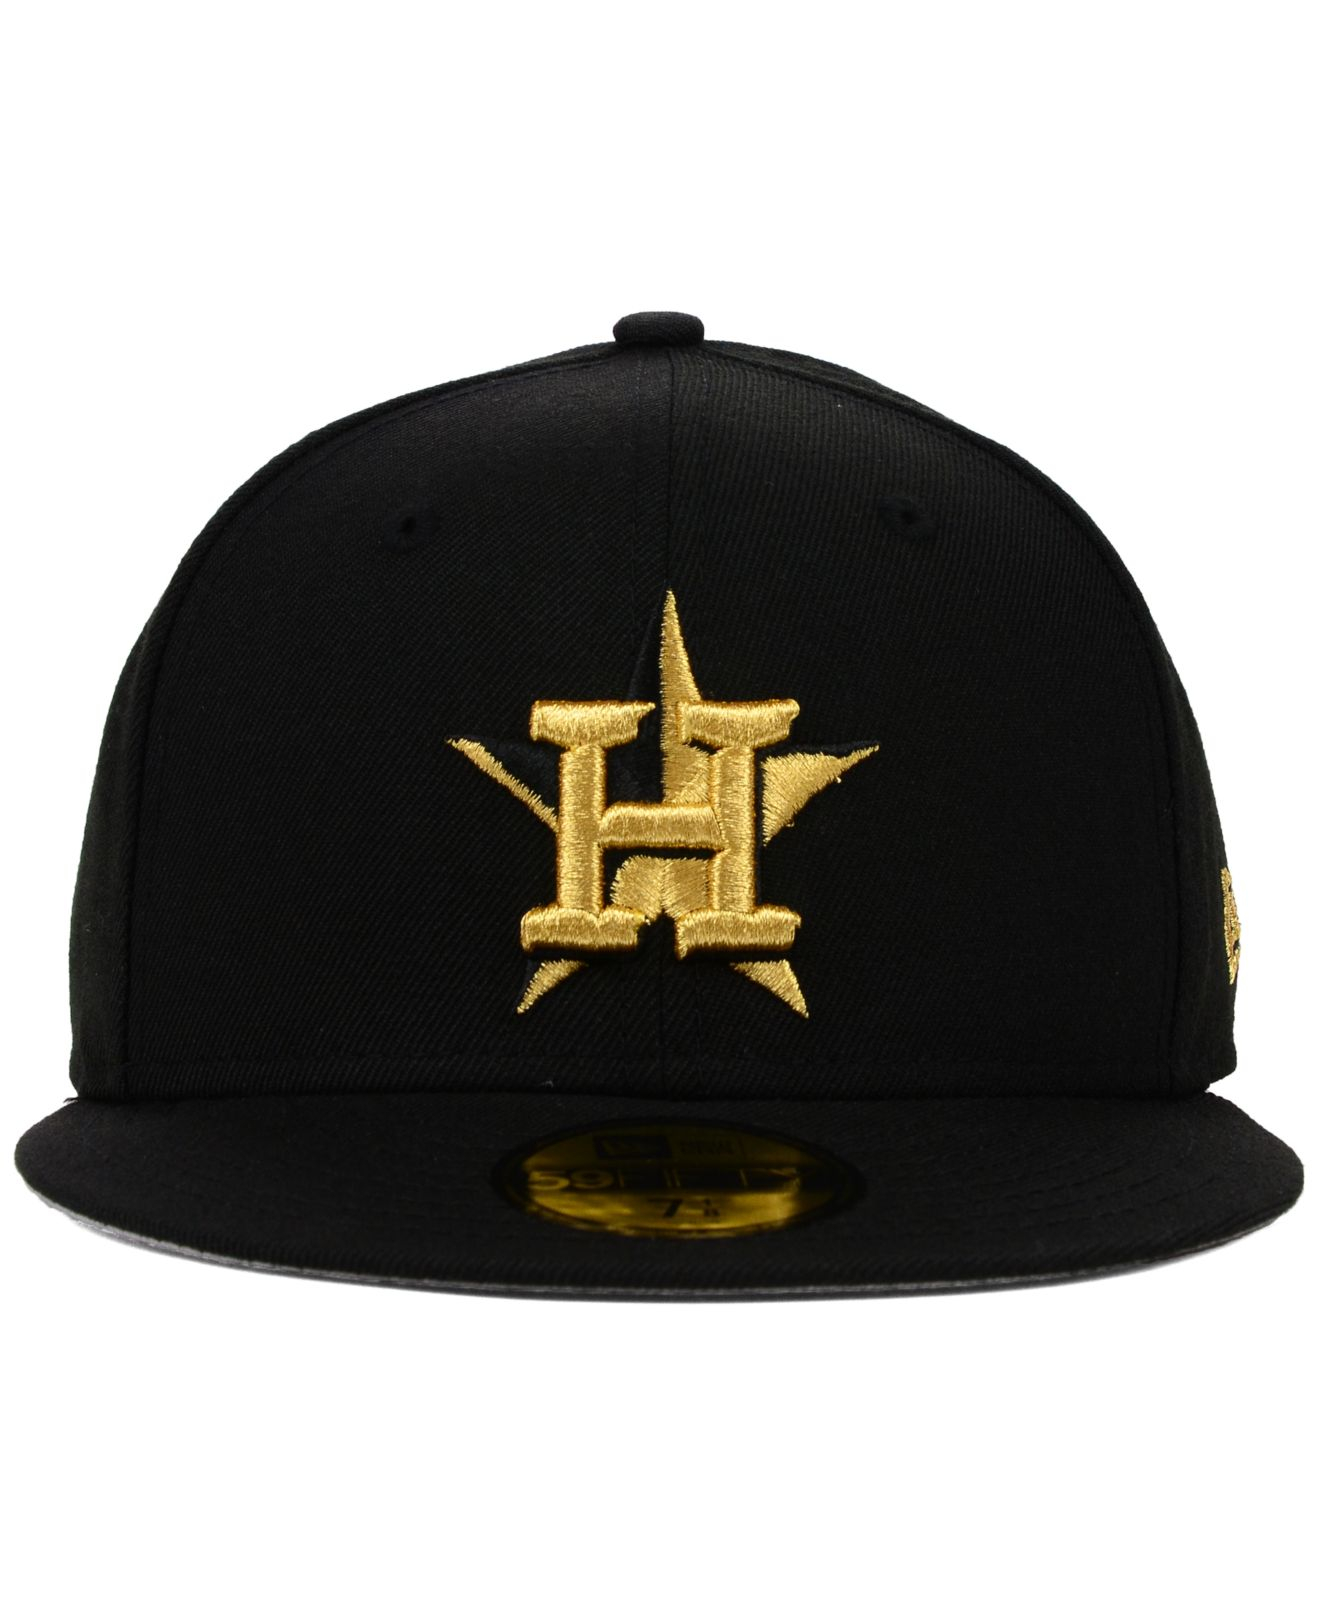 astros championship hat